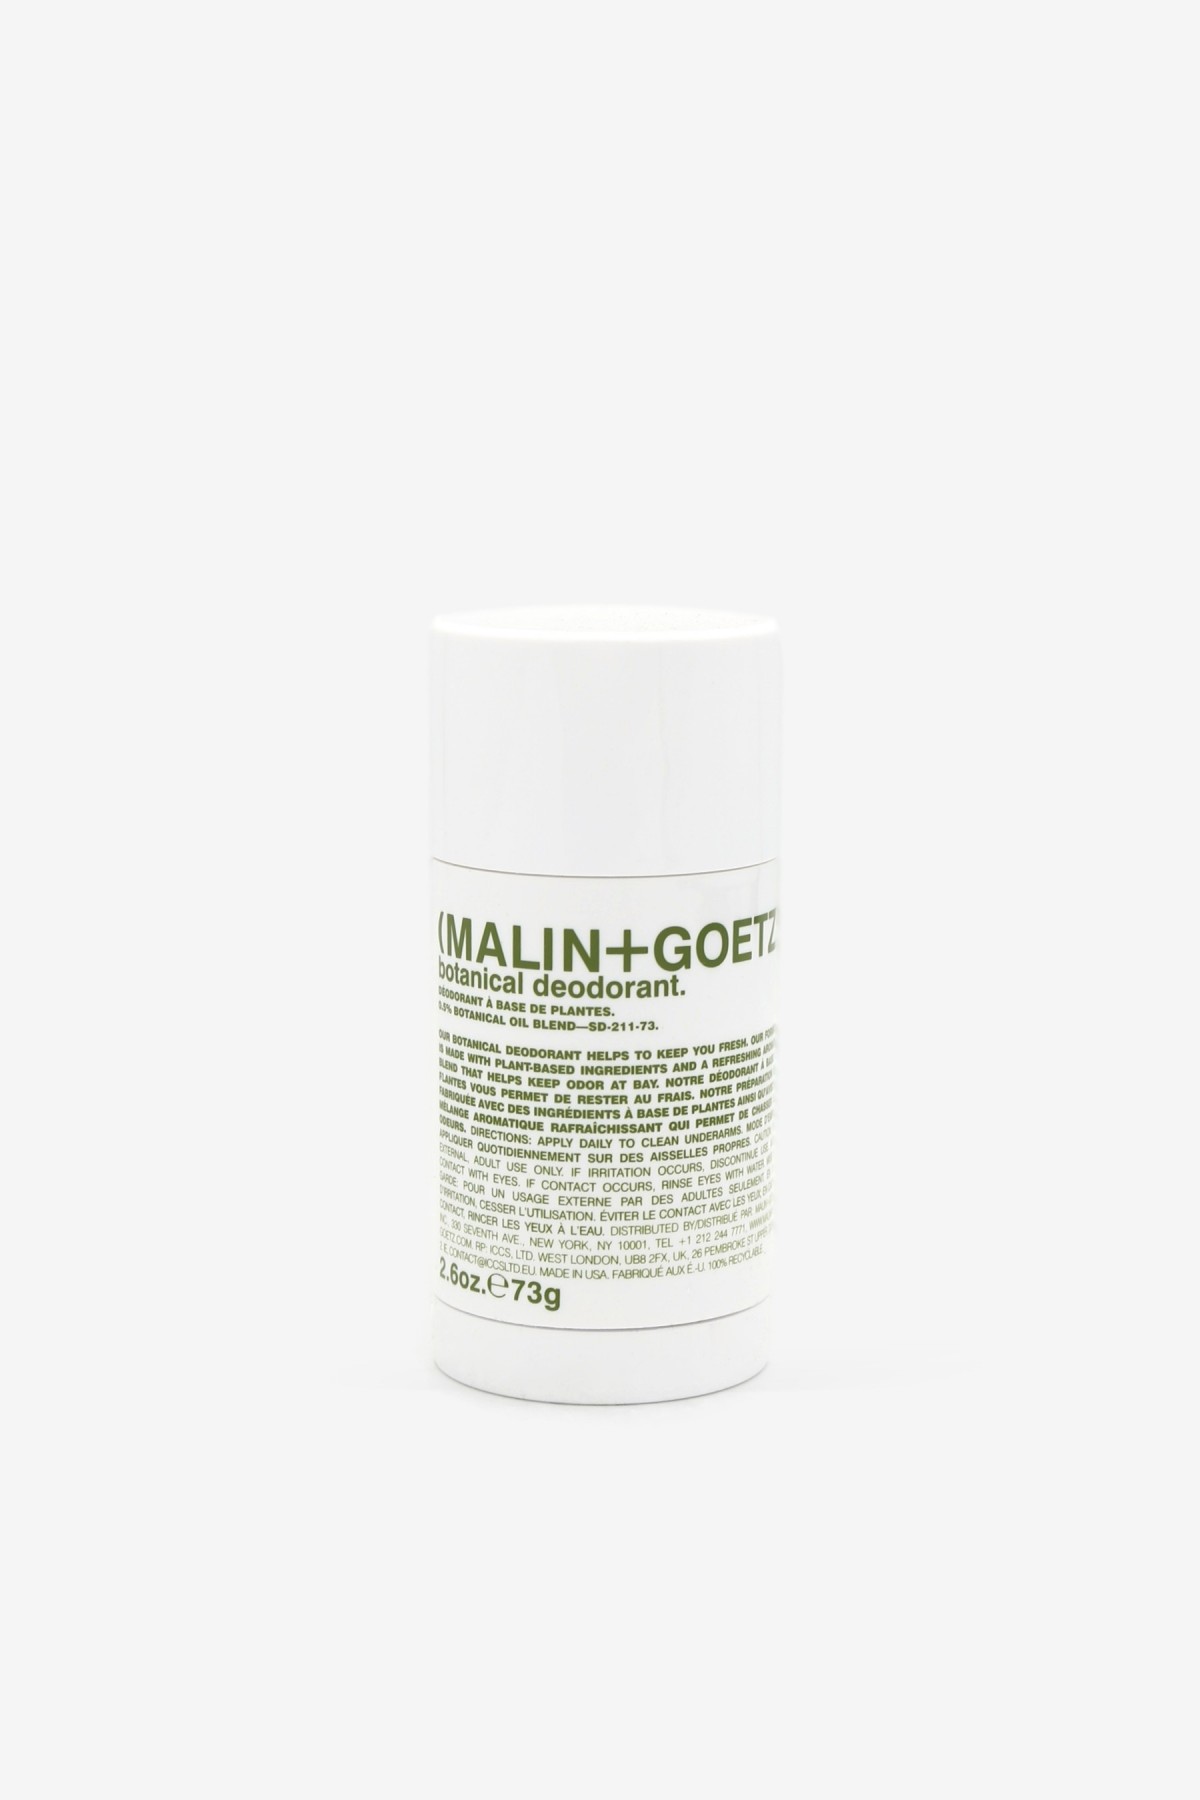 Malin+Goetz Botanical Deodorant 73g in 